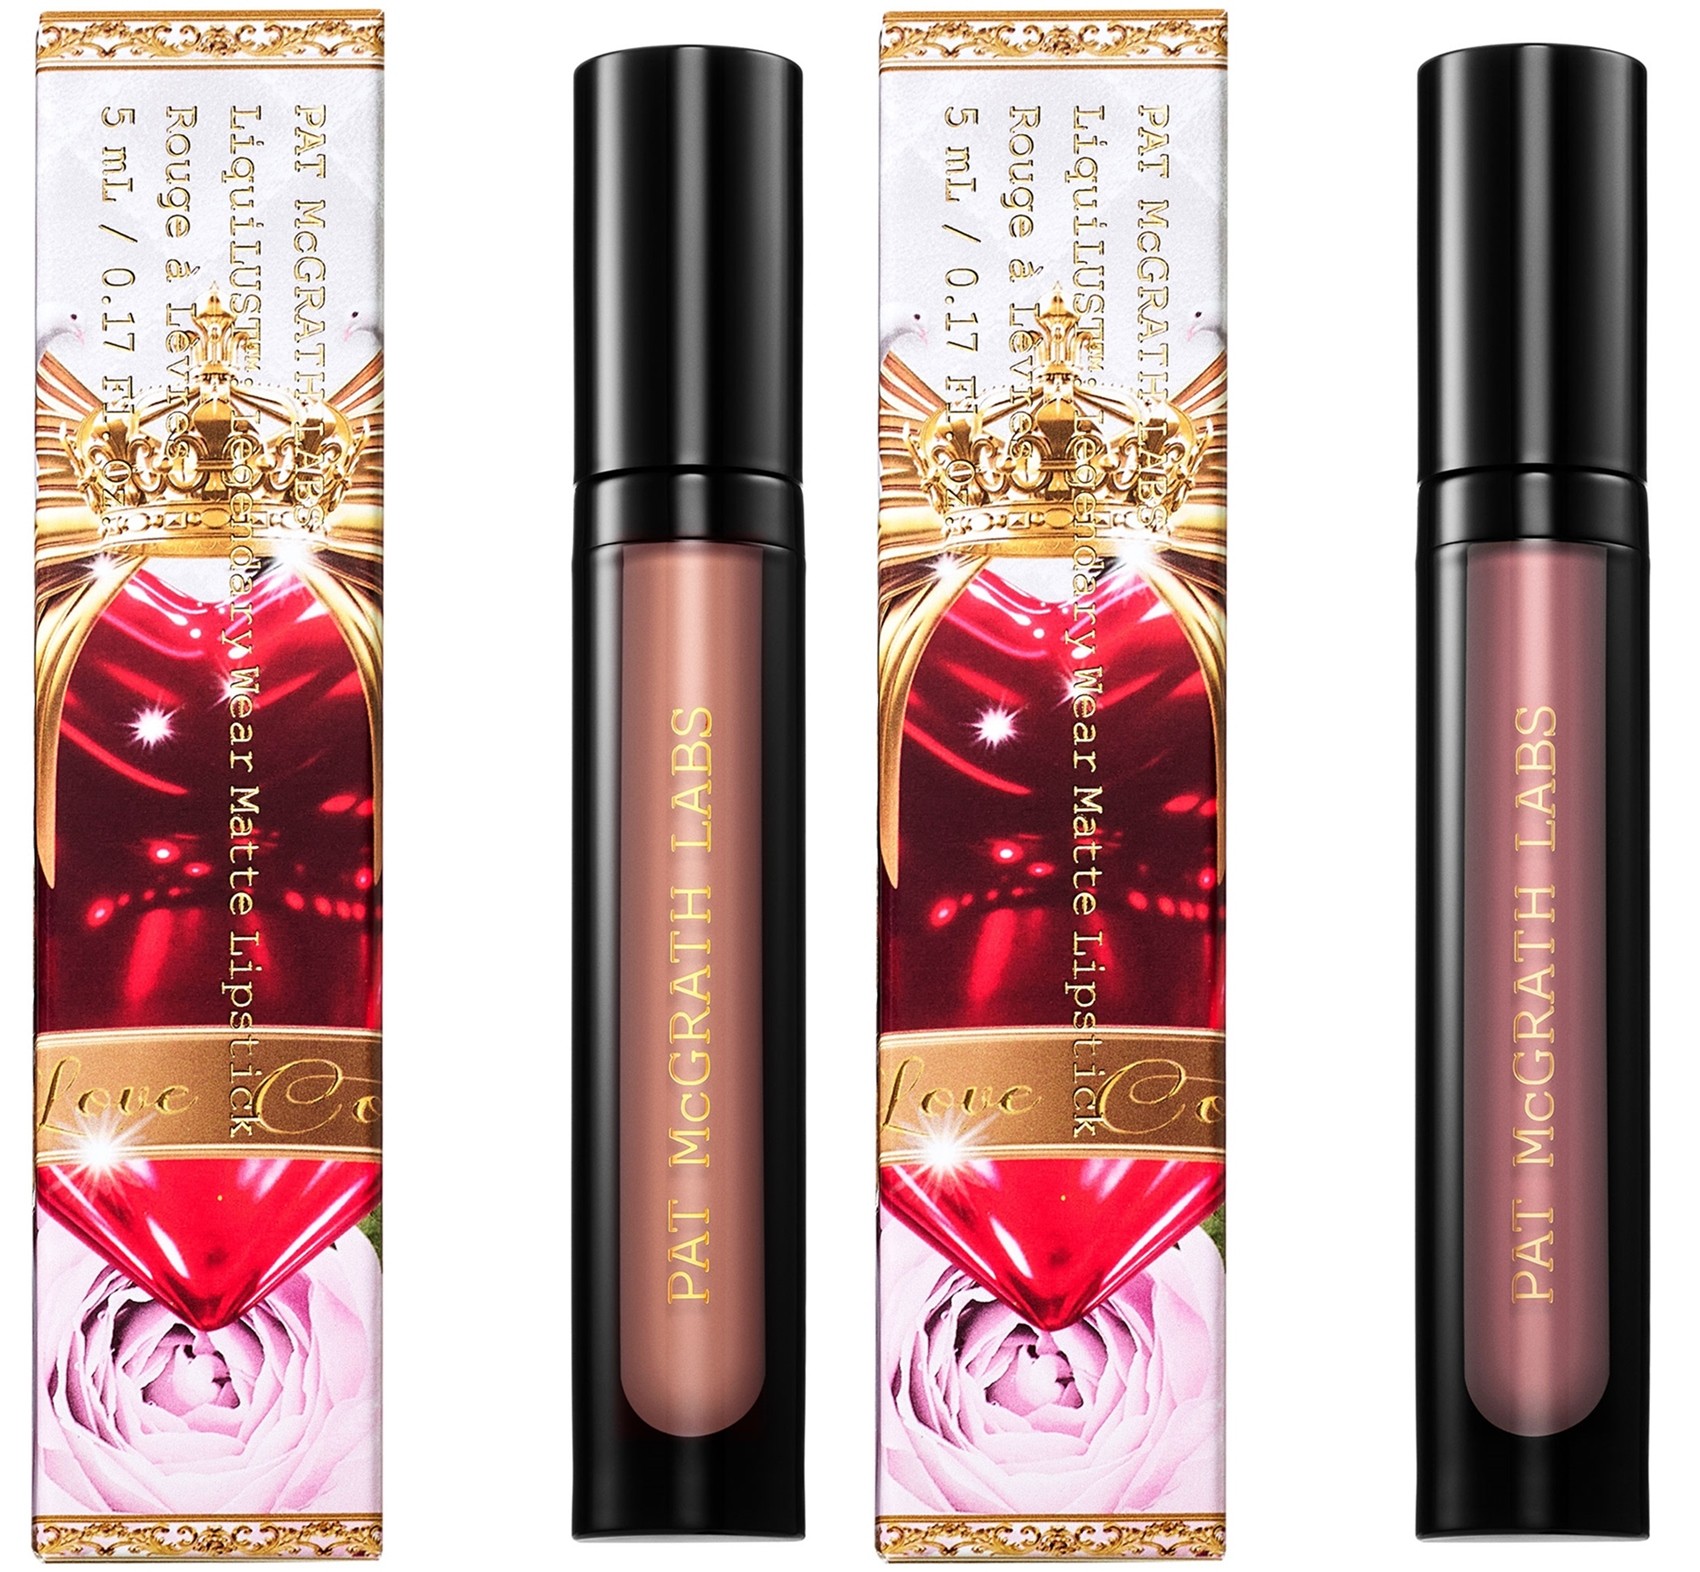 The Love Collection LiquiLUST™: Legendary Wear Matte Lipstick